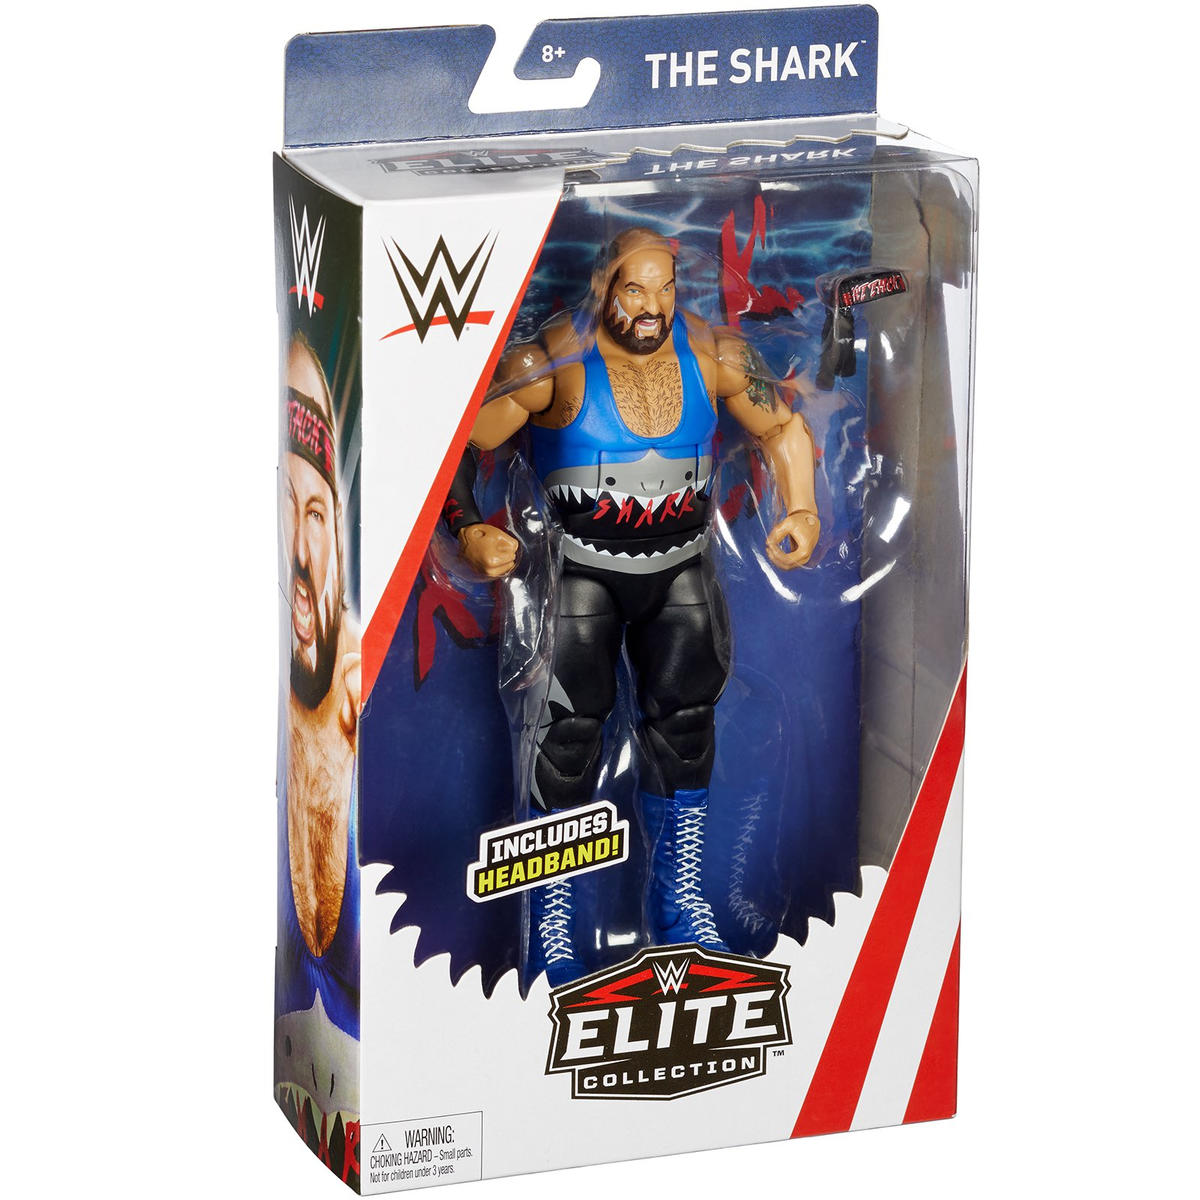 2018 WWE Mattel Elite Collection Target Exclusive The Shark